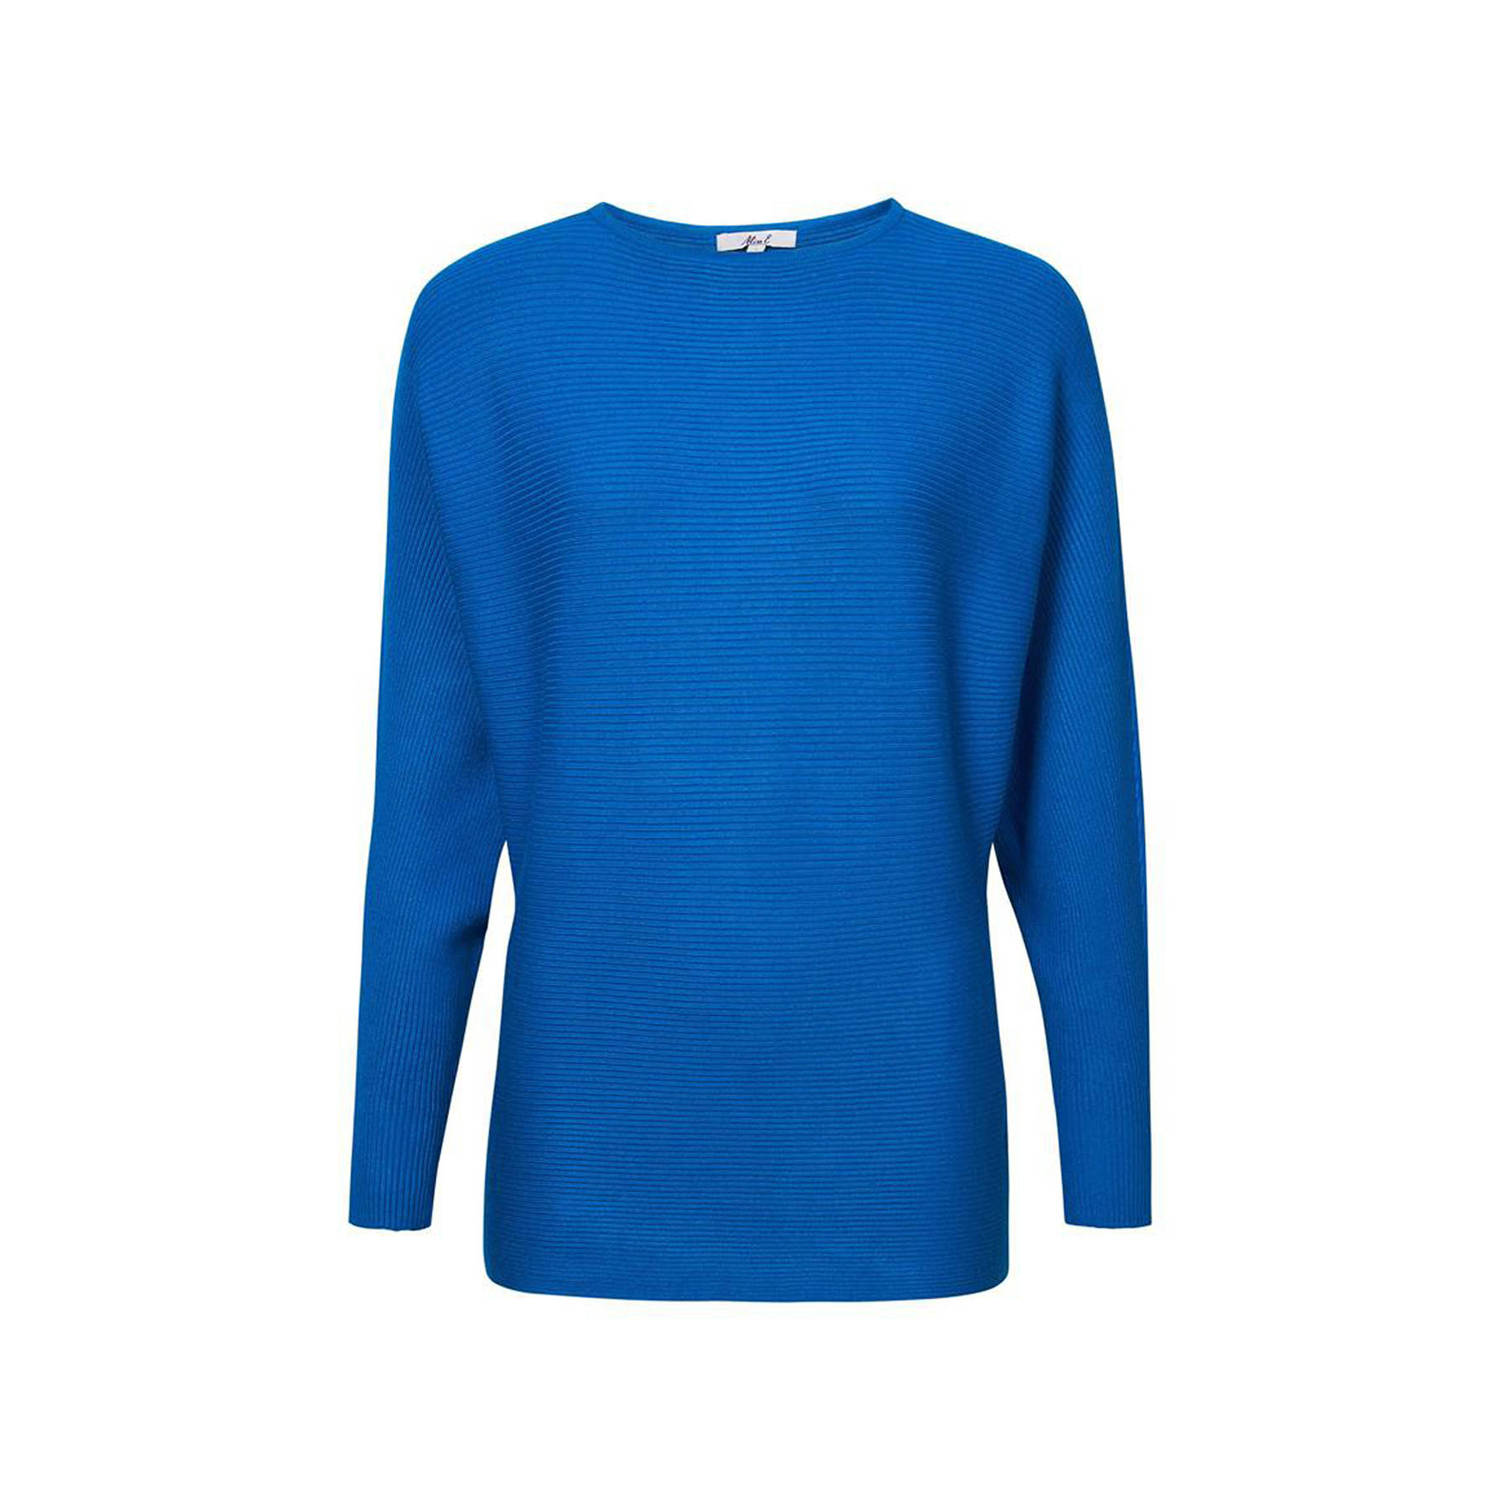 Miss Etam Regulier trui Letizia rib sweater blauw